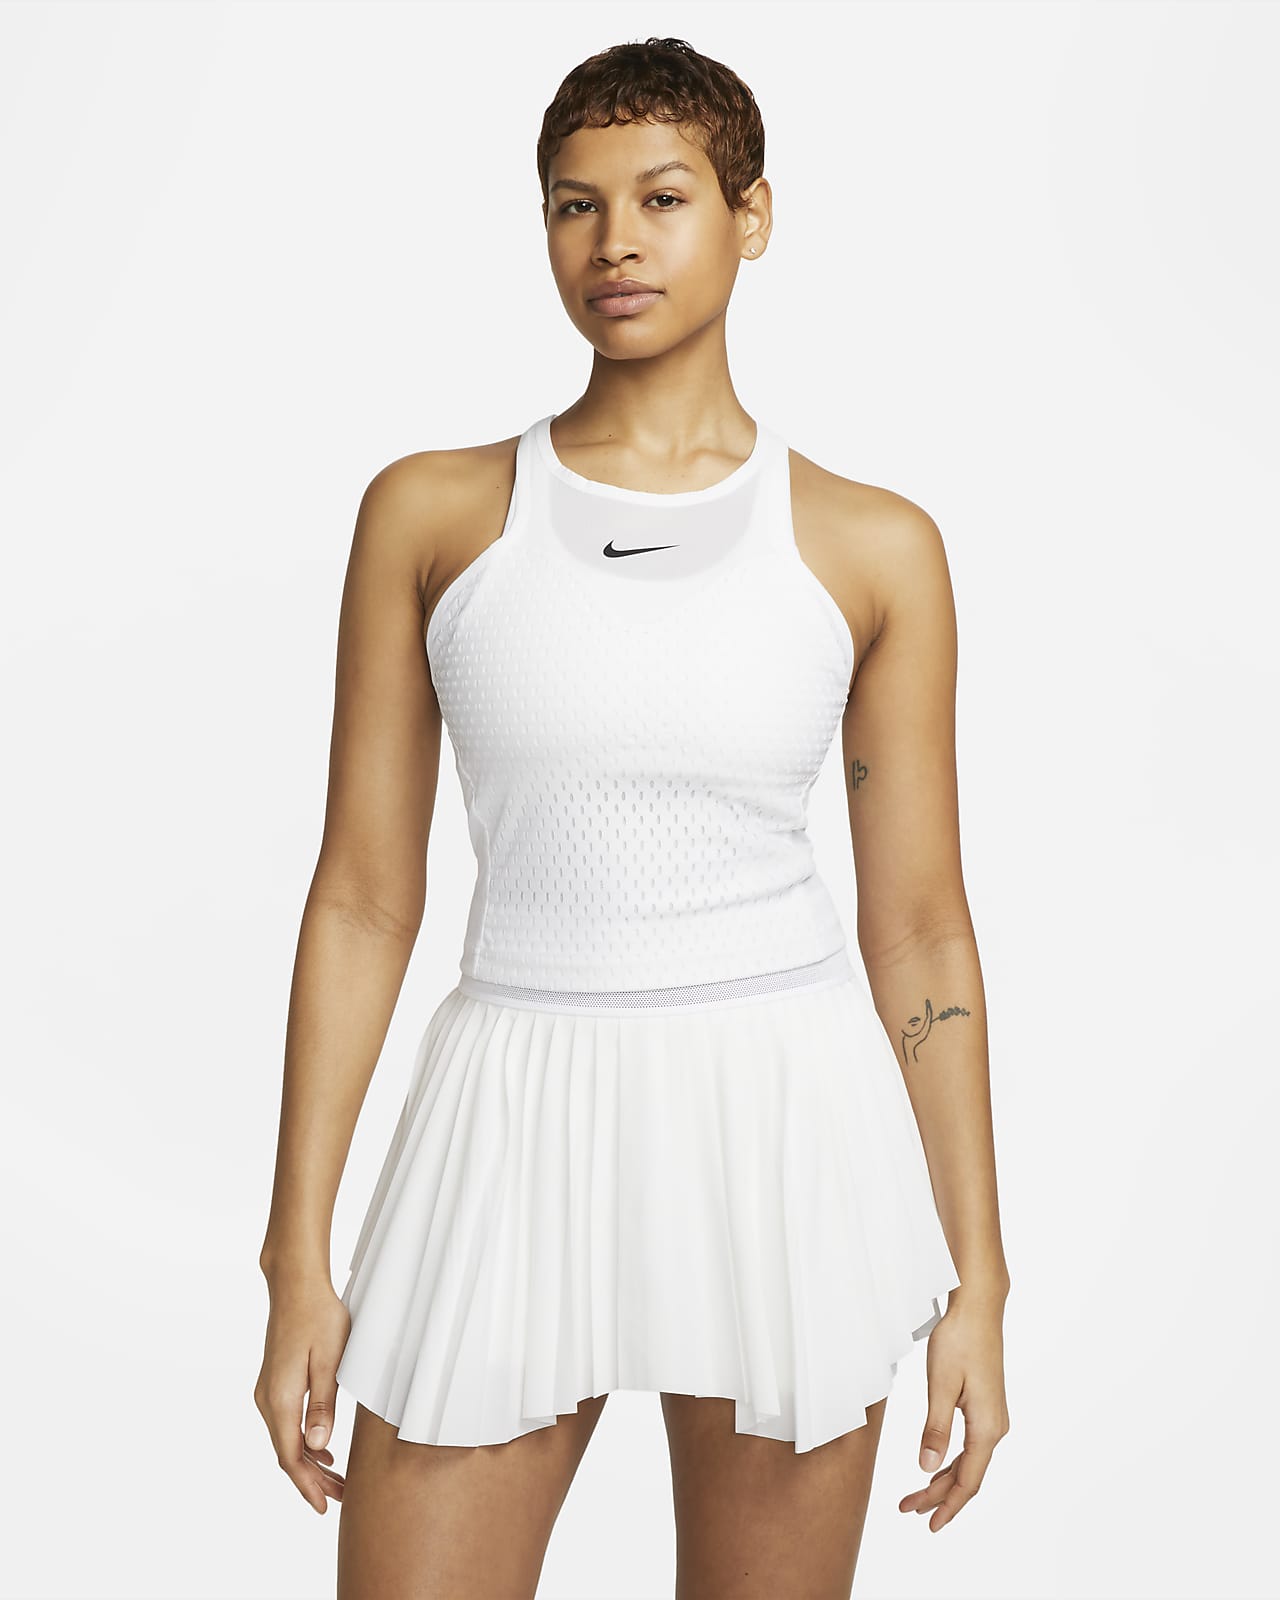 Nike Fast Swoosh Women's Mid-Rise 7/8 Printed Running Leggings with Pockets.  Nike PH